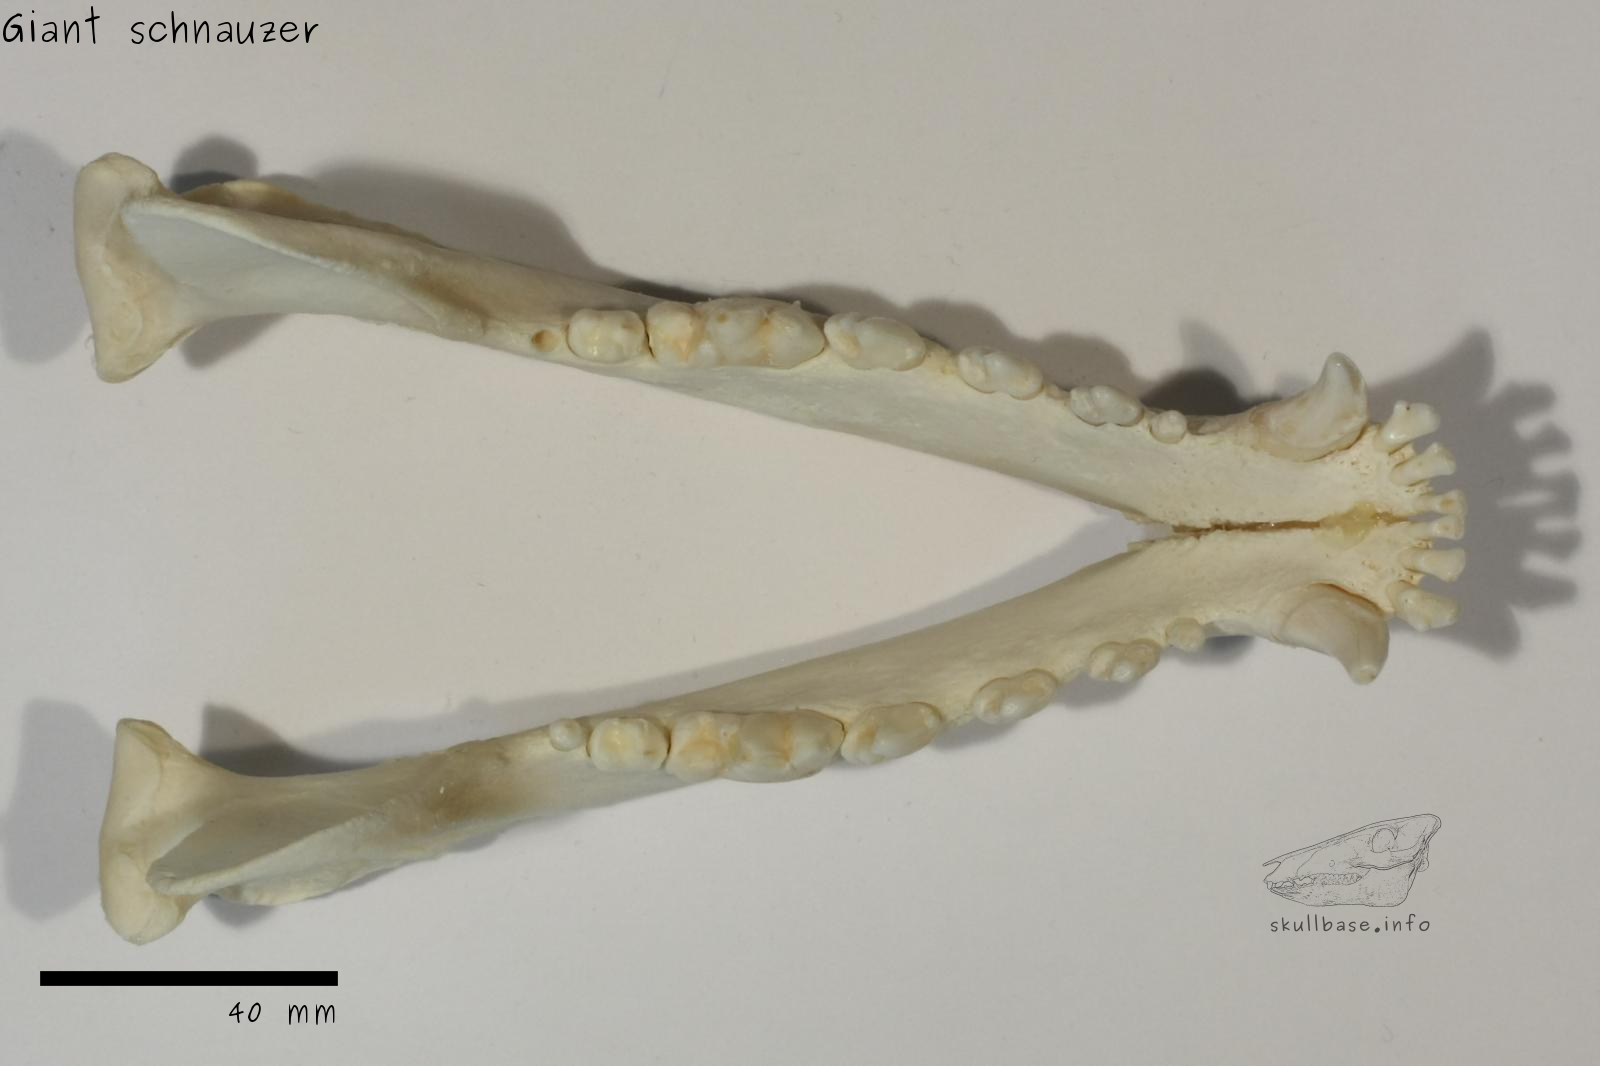 Giant schnauzer (Canis lupus familiaris) jaw